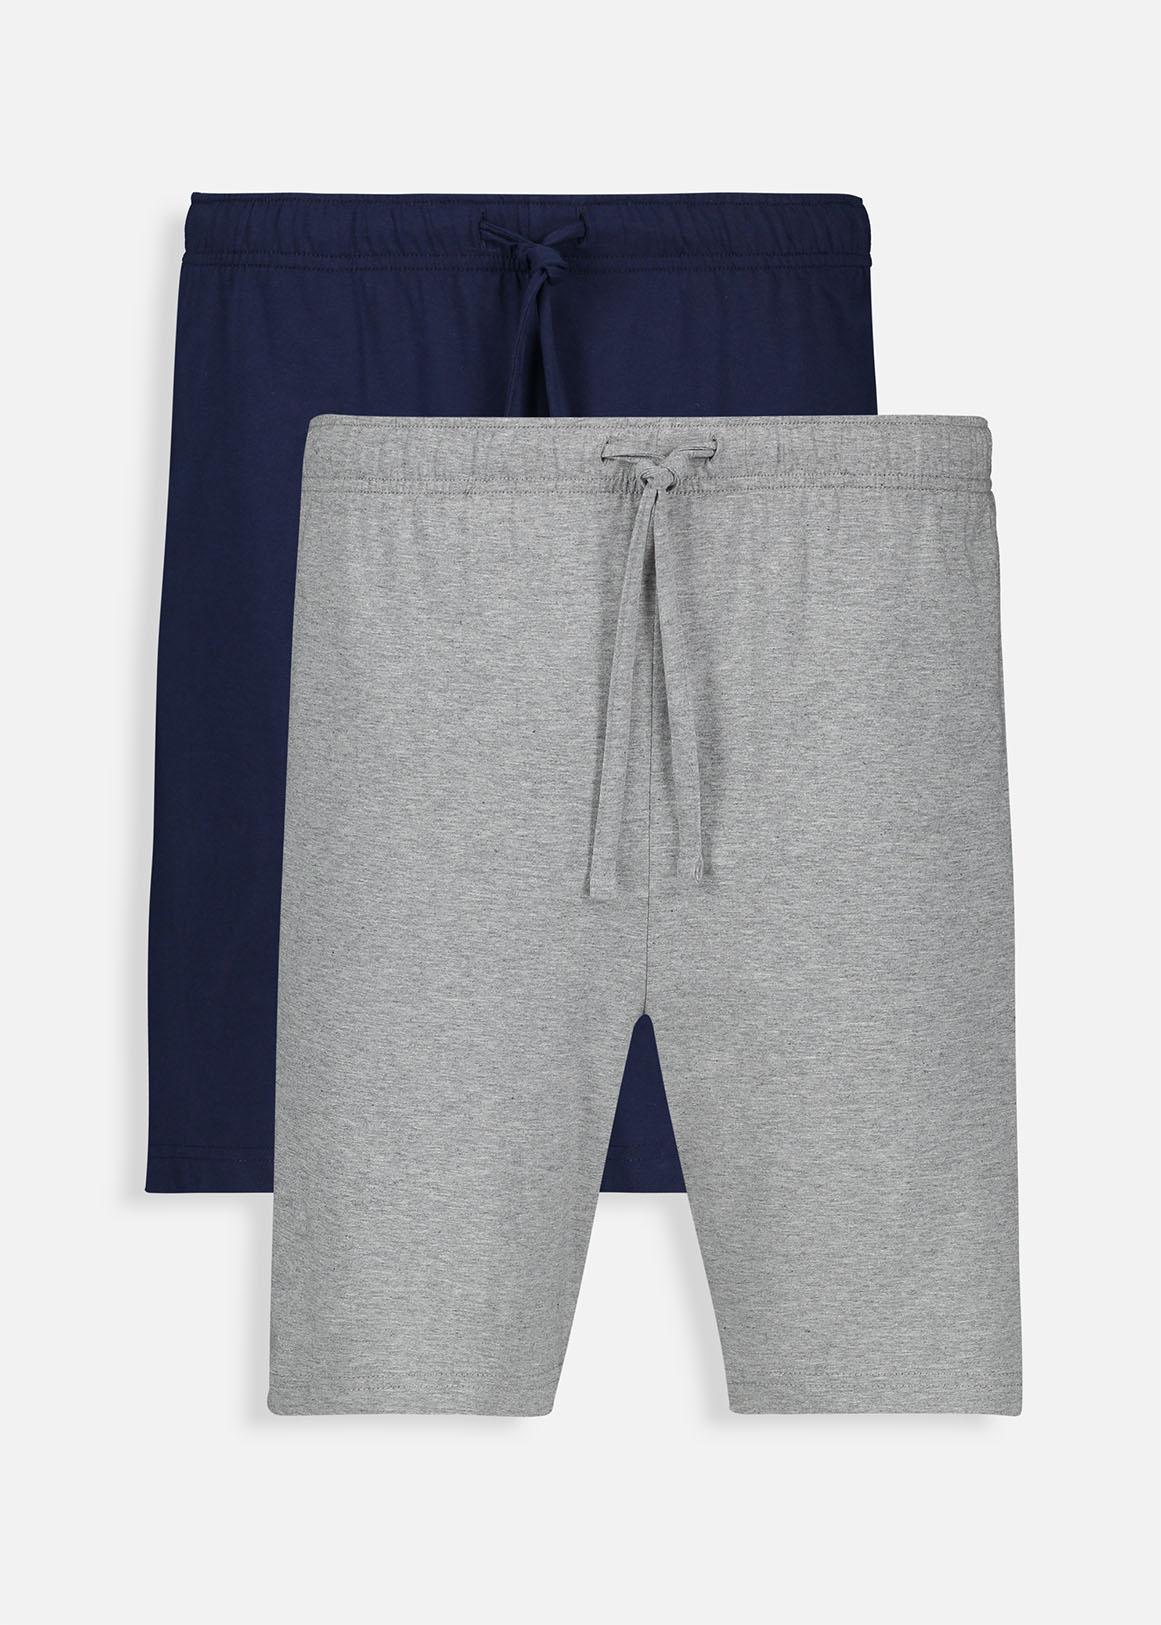 Mens Multi-Pack 100% Cotton Knit Boxers Pajama Bottoms - Sleep/Lounge Shorts